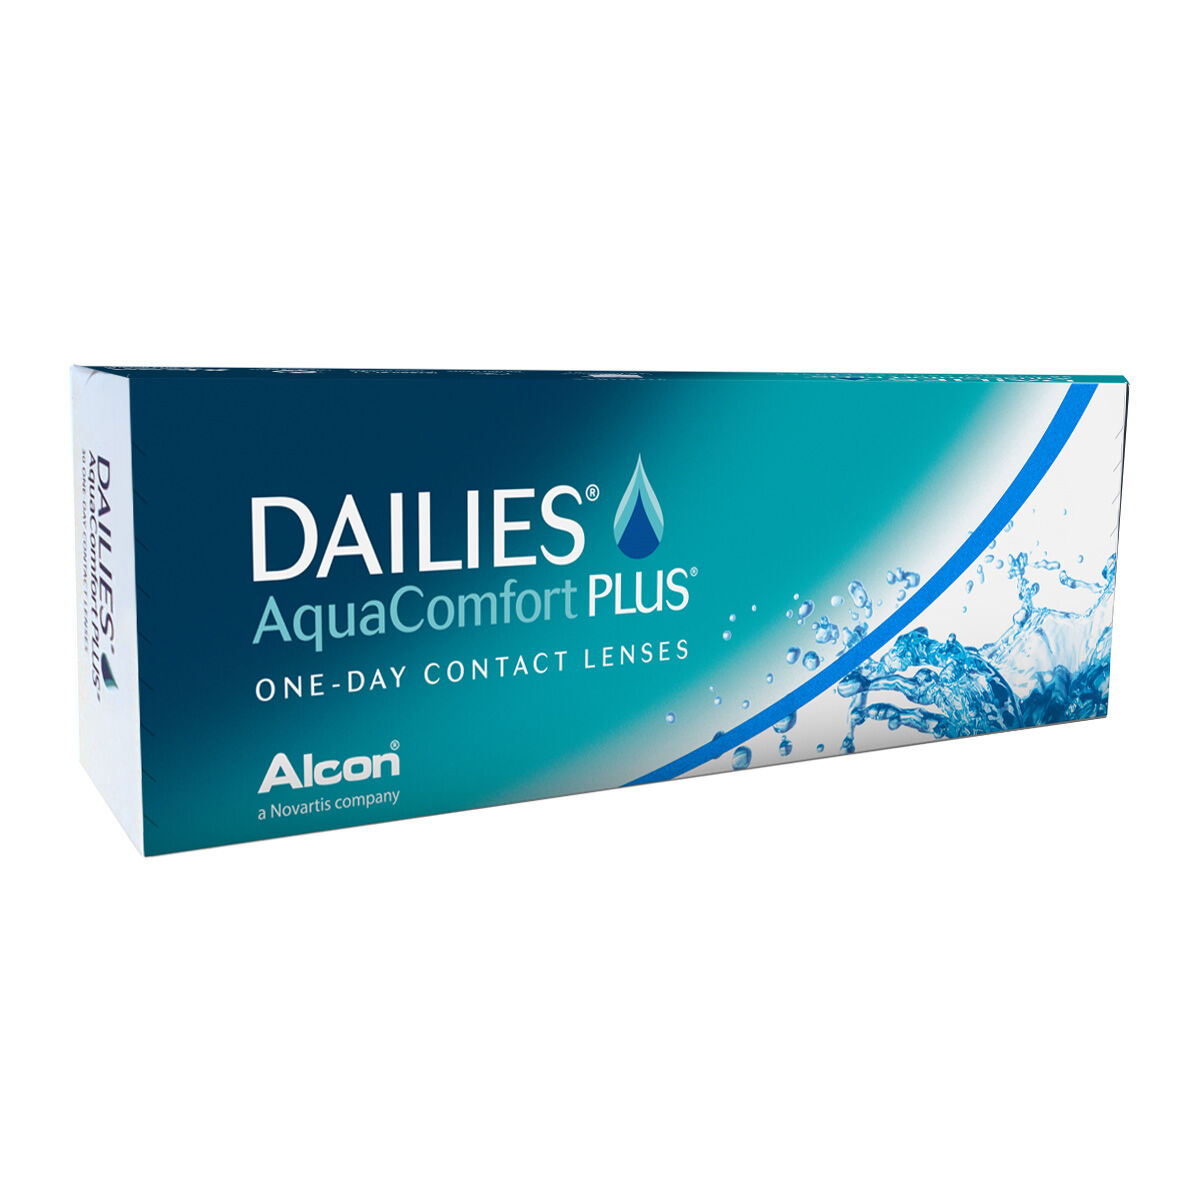 Alcon Dailies Aqua Comfort Plus (30 Contact Lenses), CIBA Vision/Alcon, Daily Lenses, Nelfilcon A